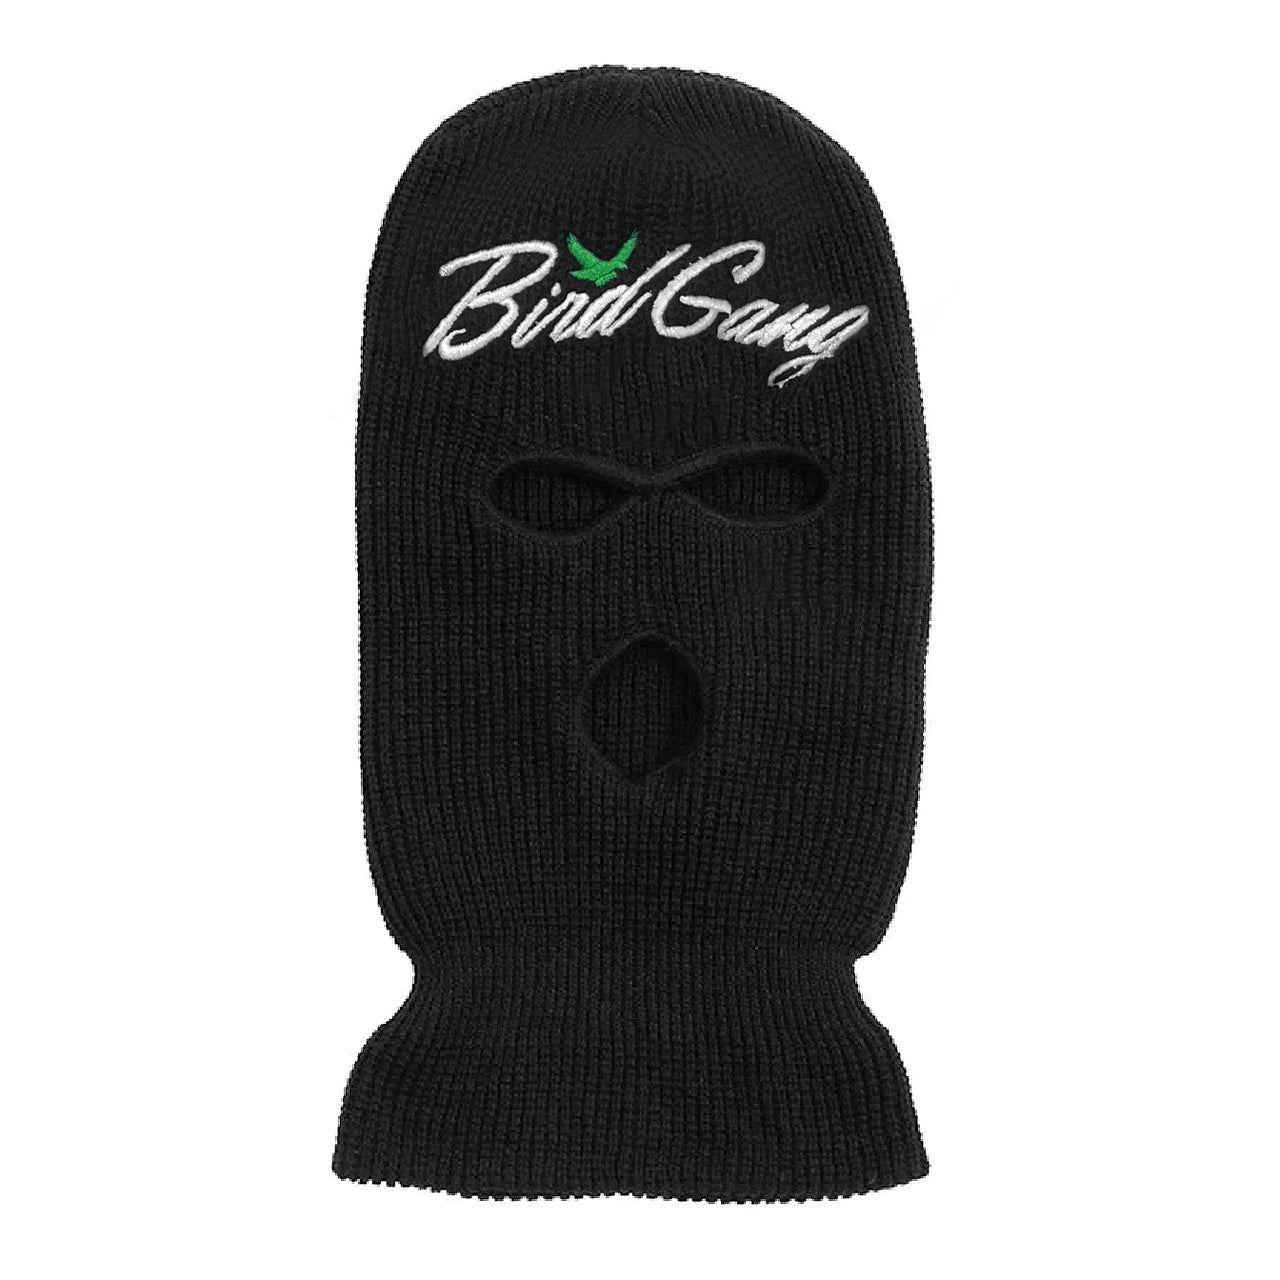 "Bird Gang" Ski Mask